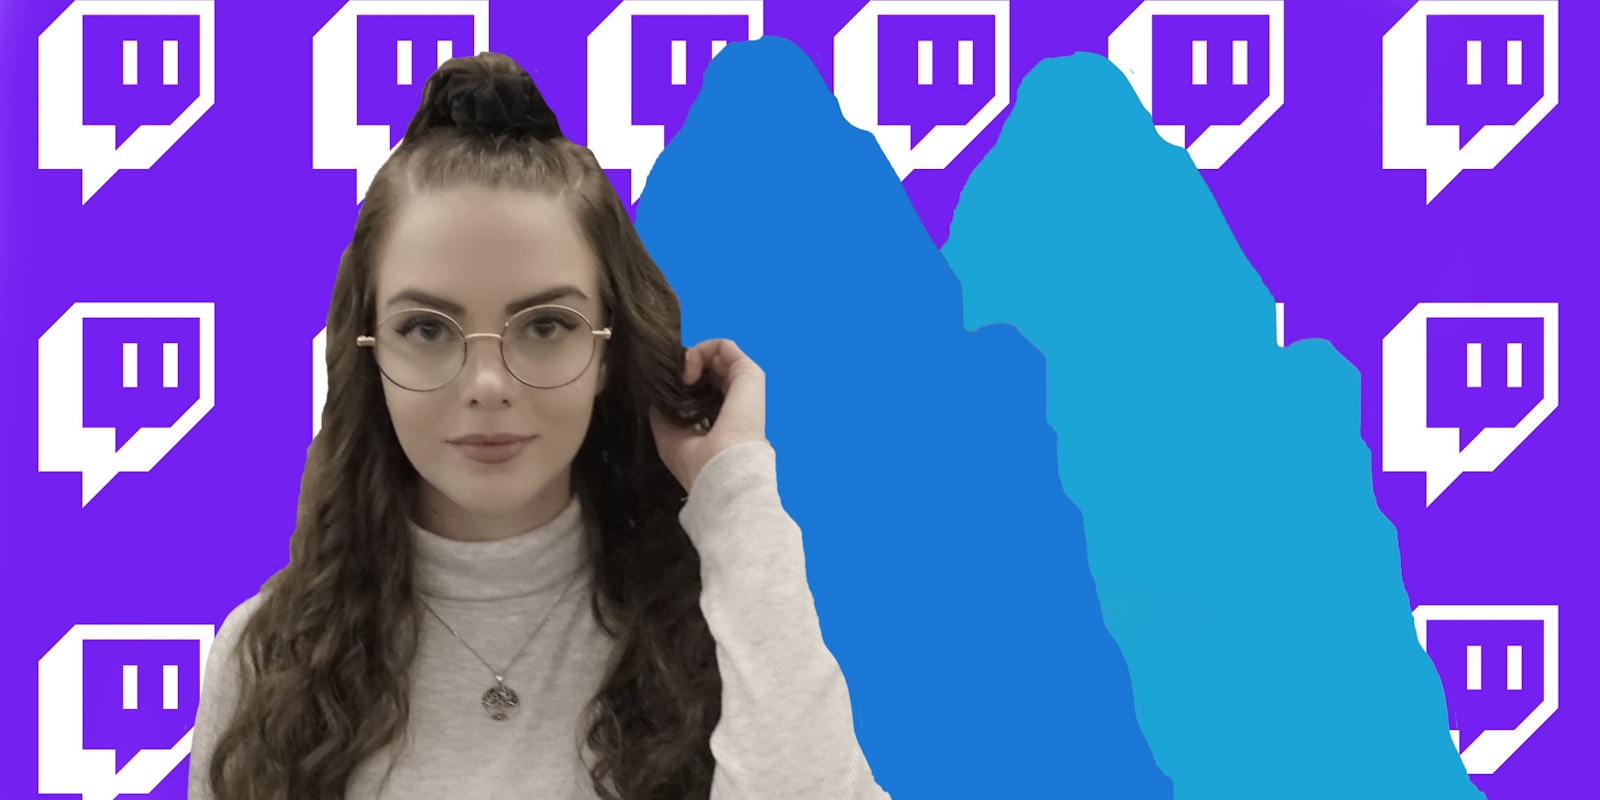 Twitch streamer Loeya on blue/purple twitch pattern background